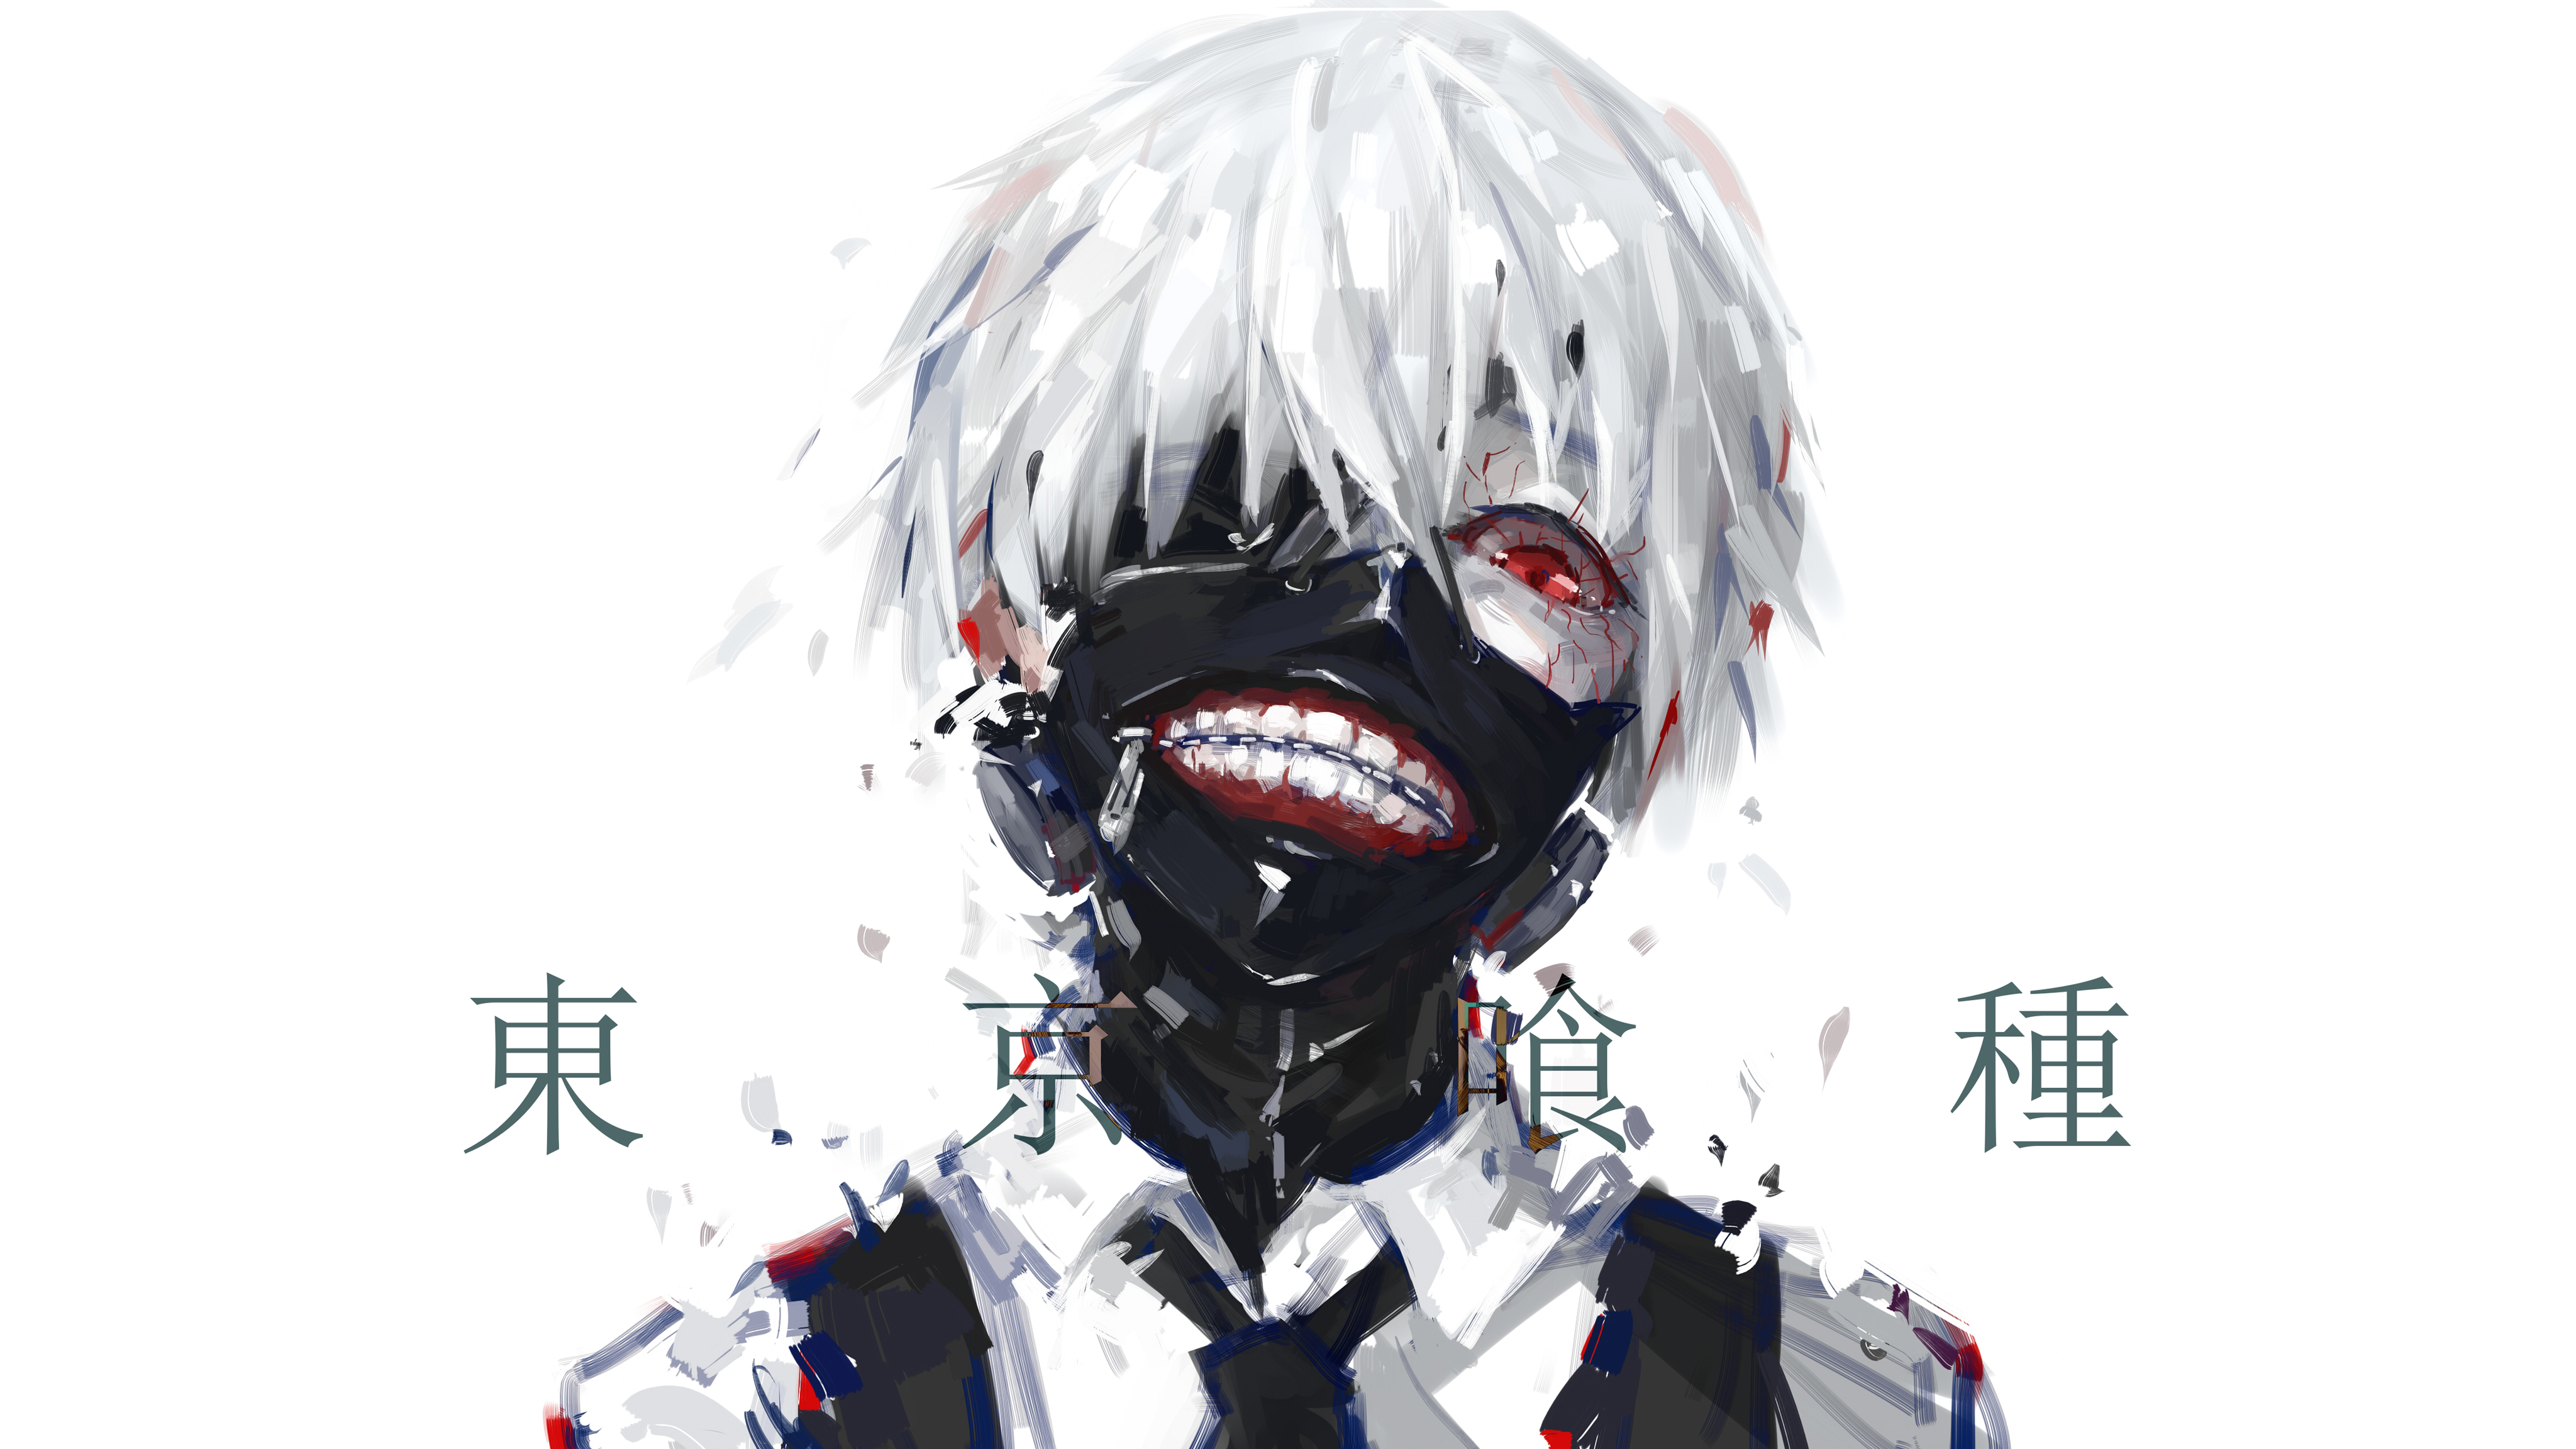 Tokyo Ghoul 4k Ultra HD Wallpaper Background Image 4096x2304 4096x2304